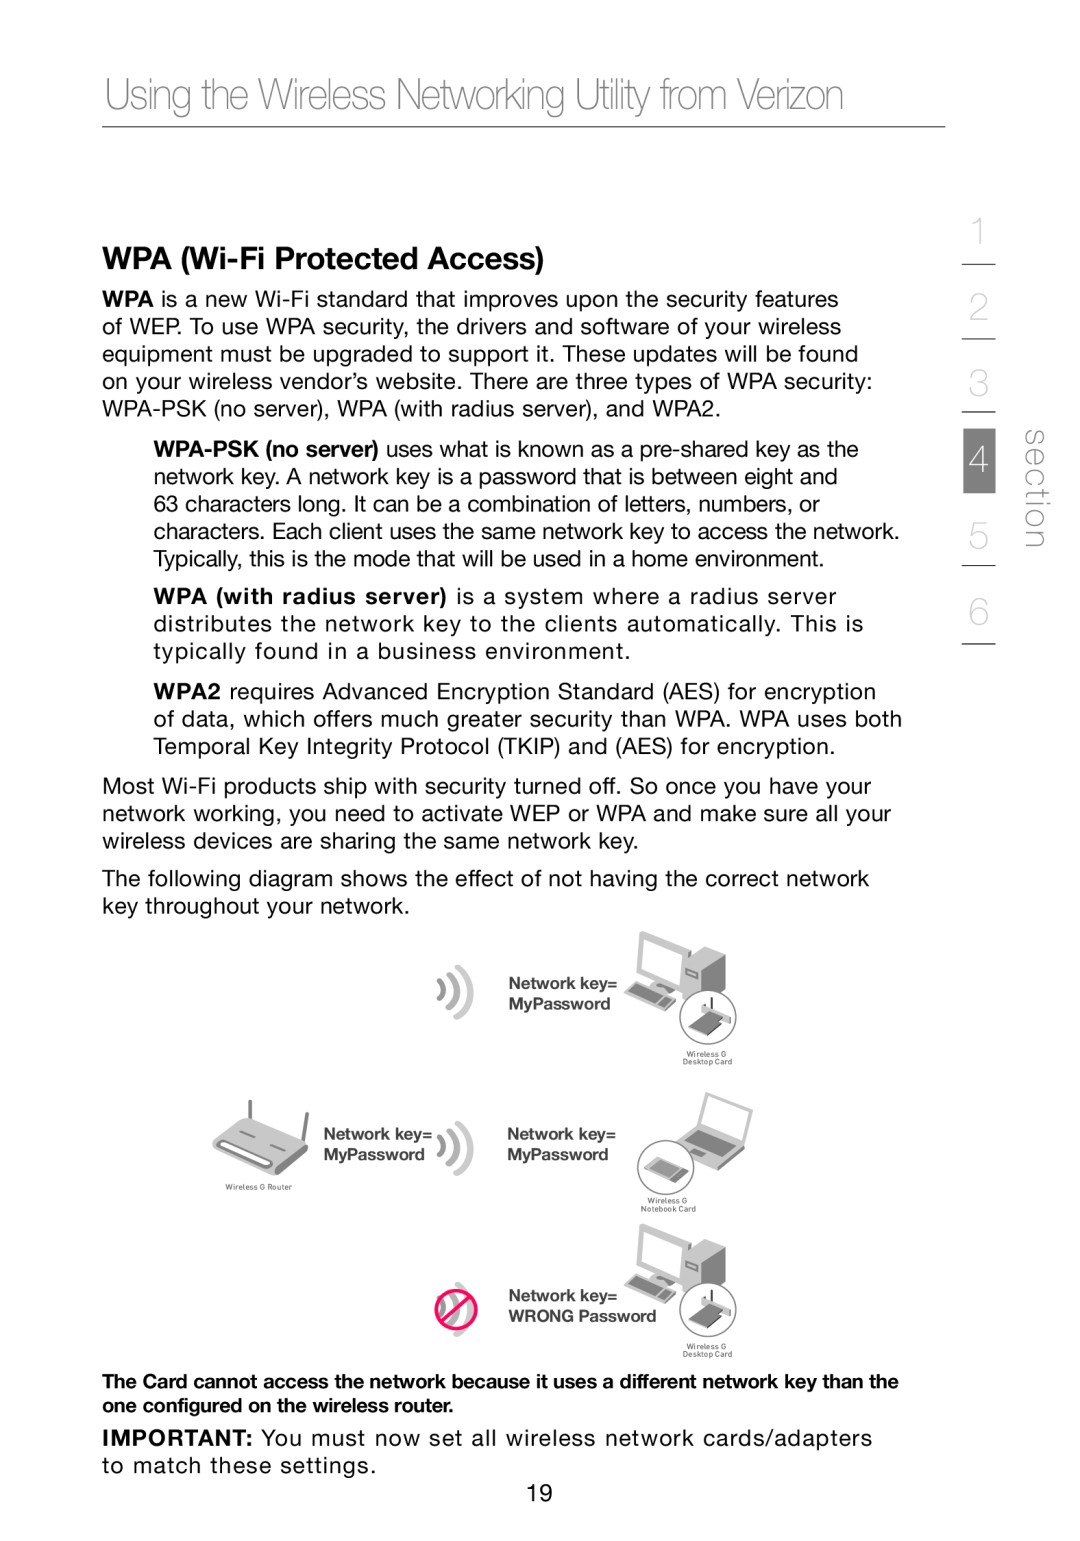 Verizon VZ4000 WPA Wi-Fi Protected Access, Using the Wireless Networking Utility from Verizon, Wireless G Desktop Card 